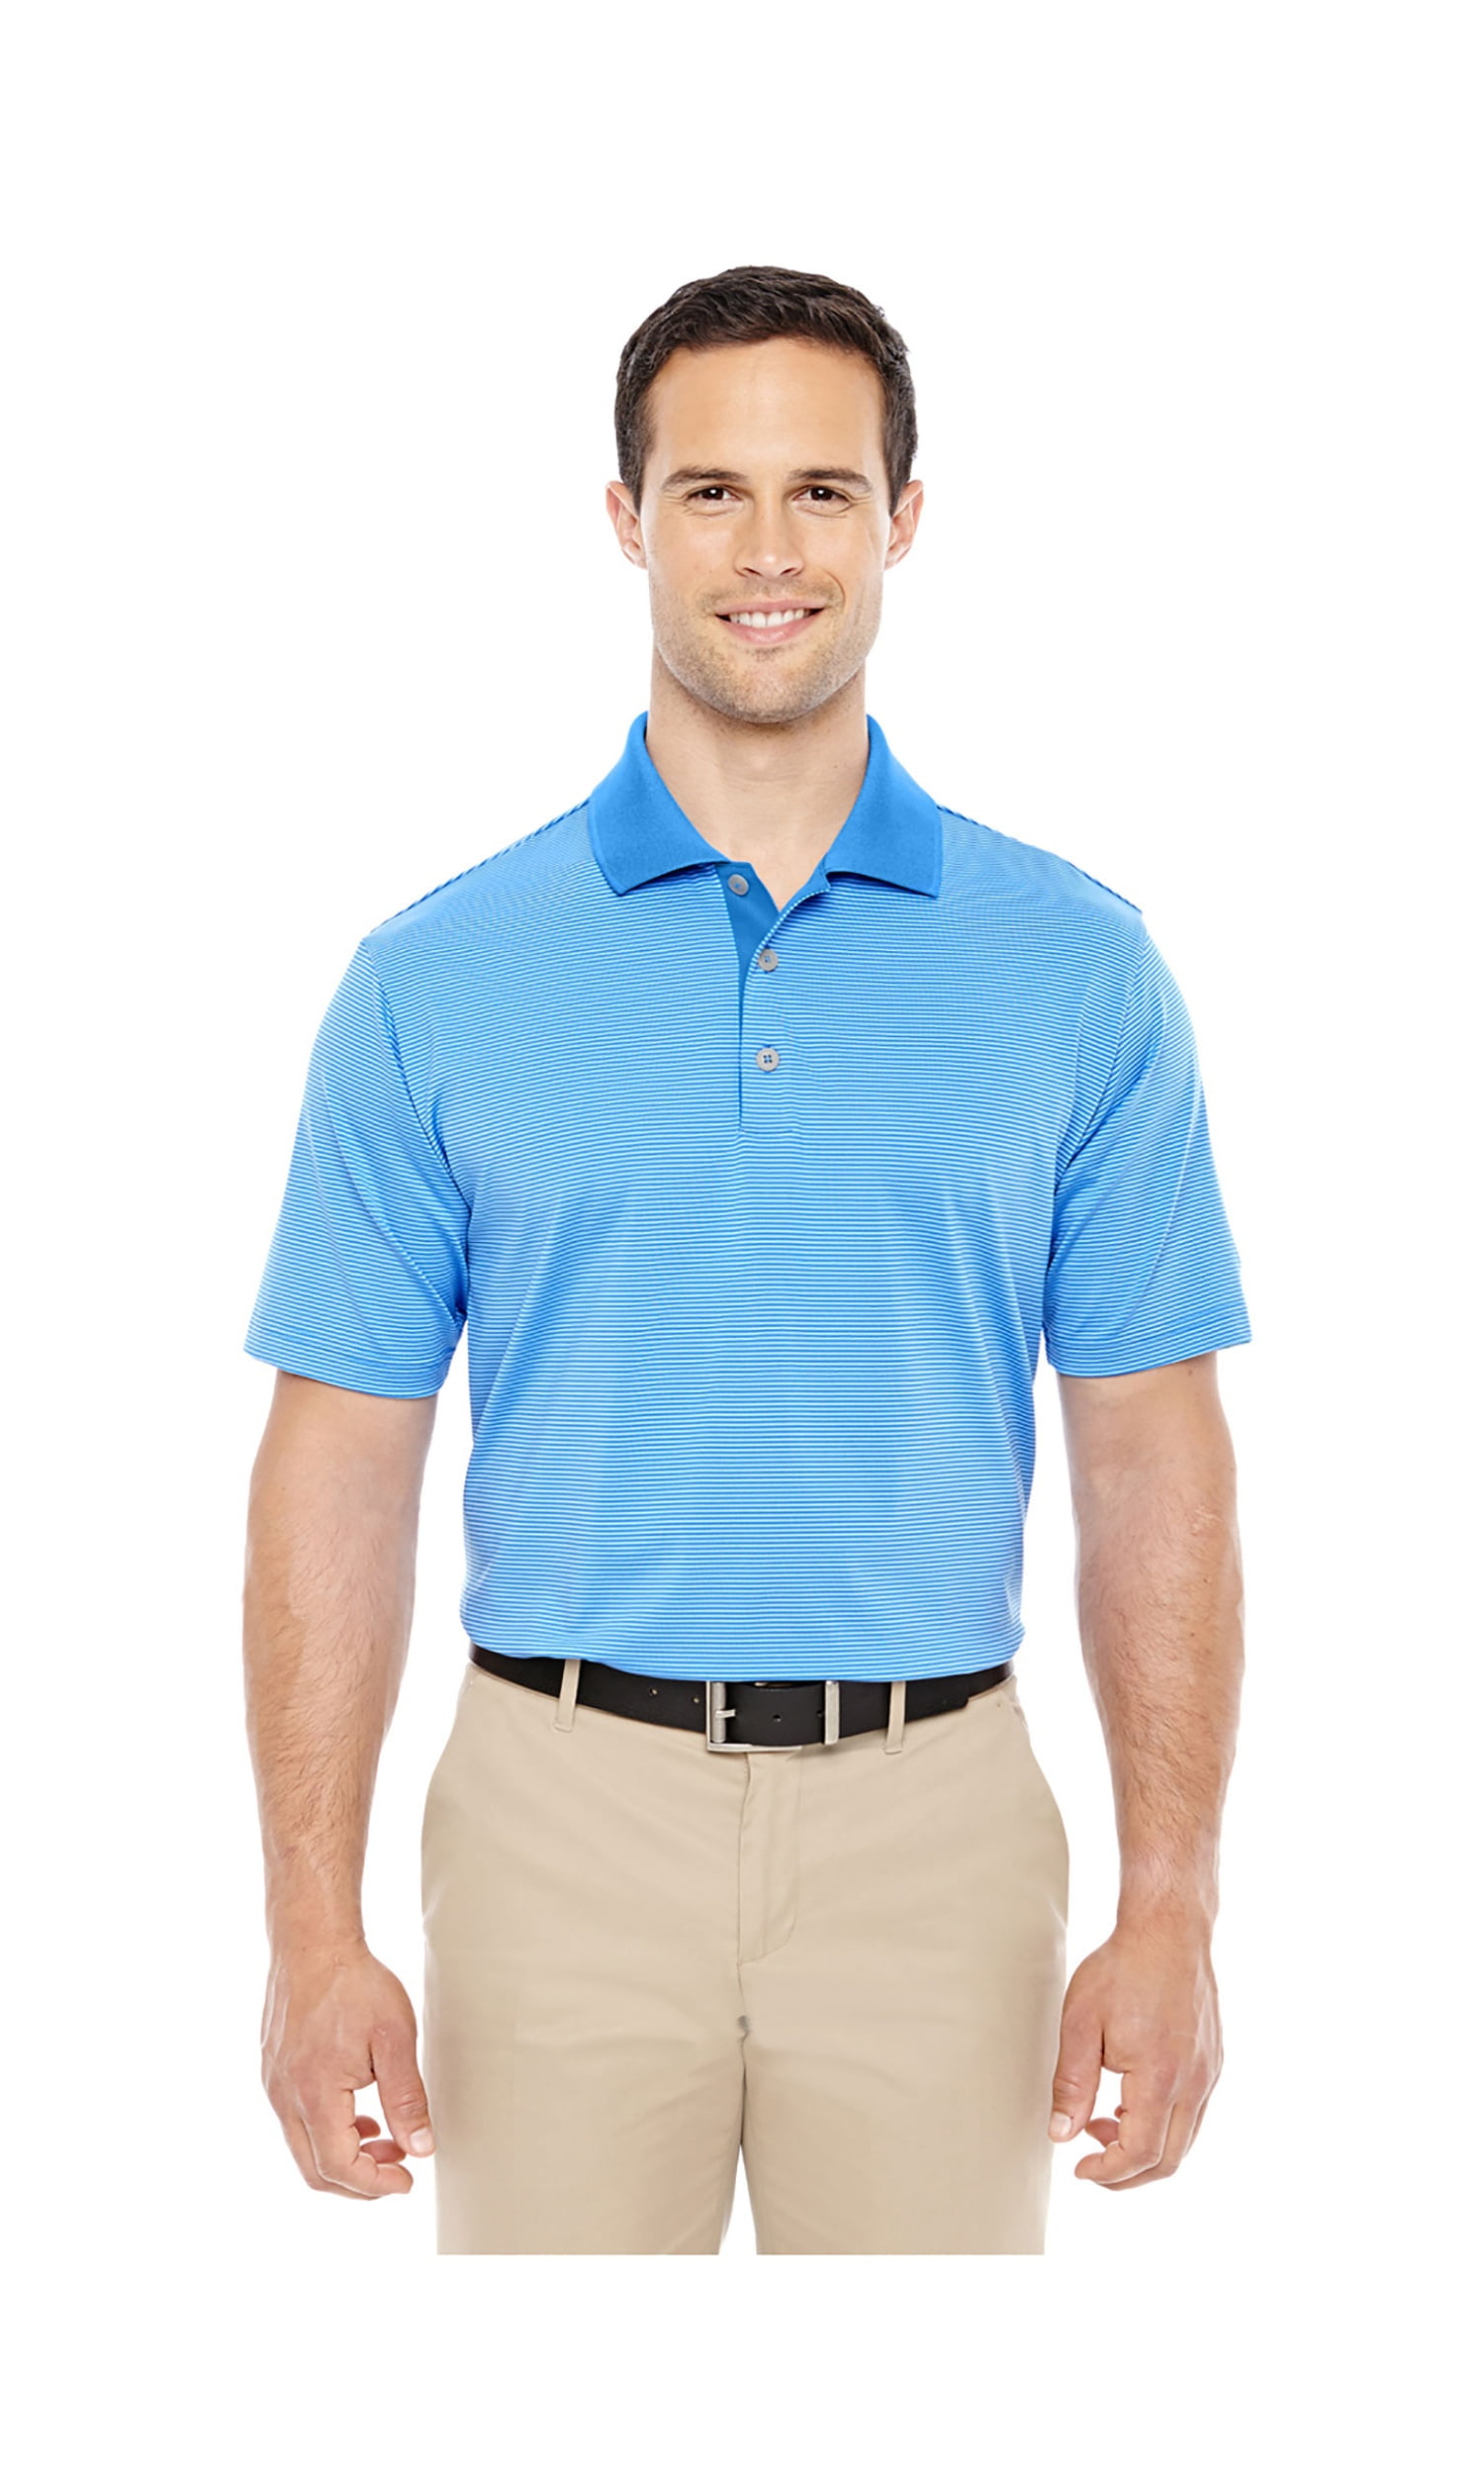 Adidas - Adidas ClimaLite Men's Classic Stripe Pique Polo Shirt, Style